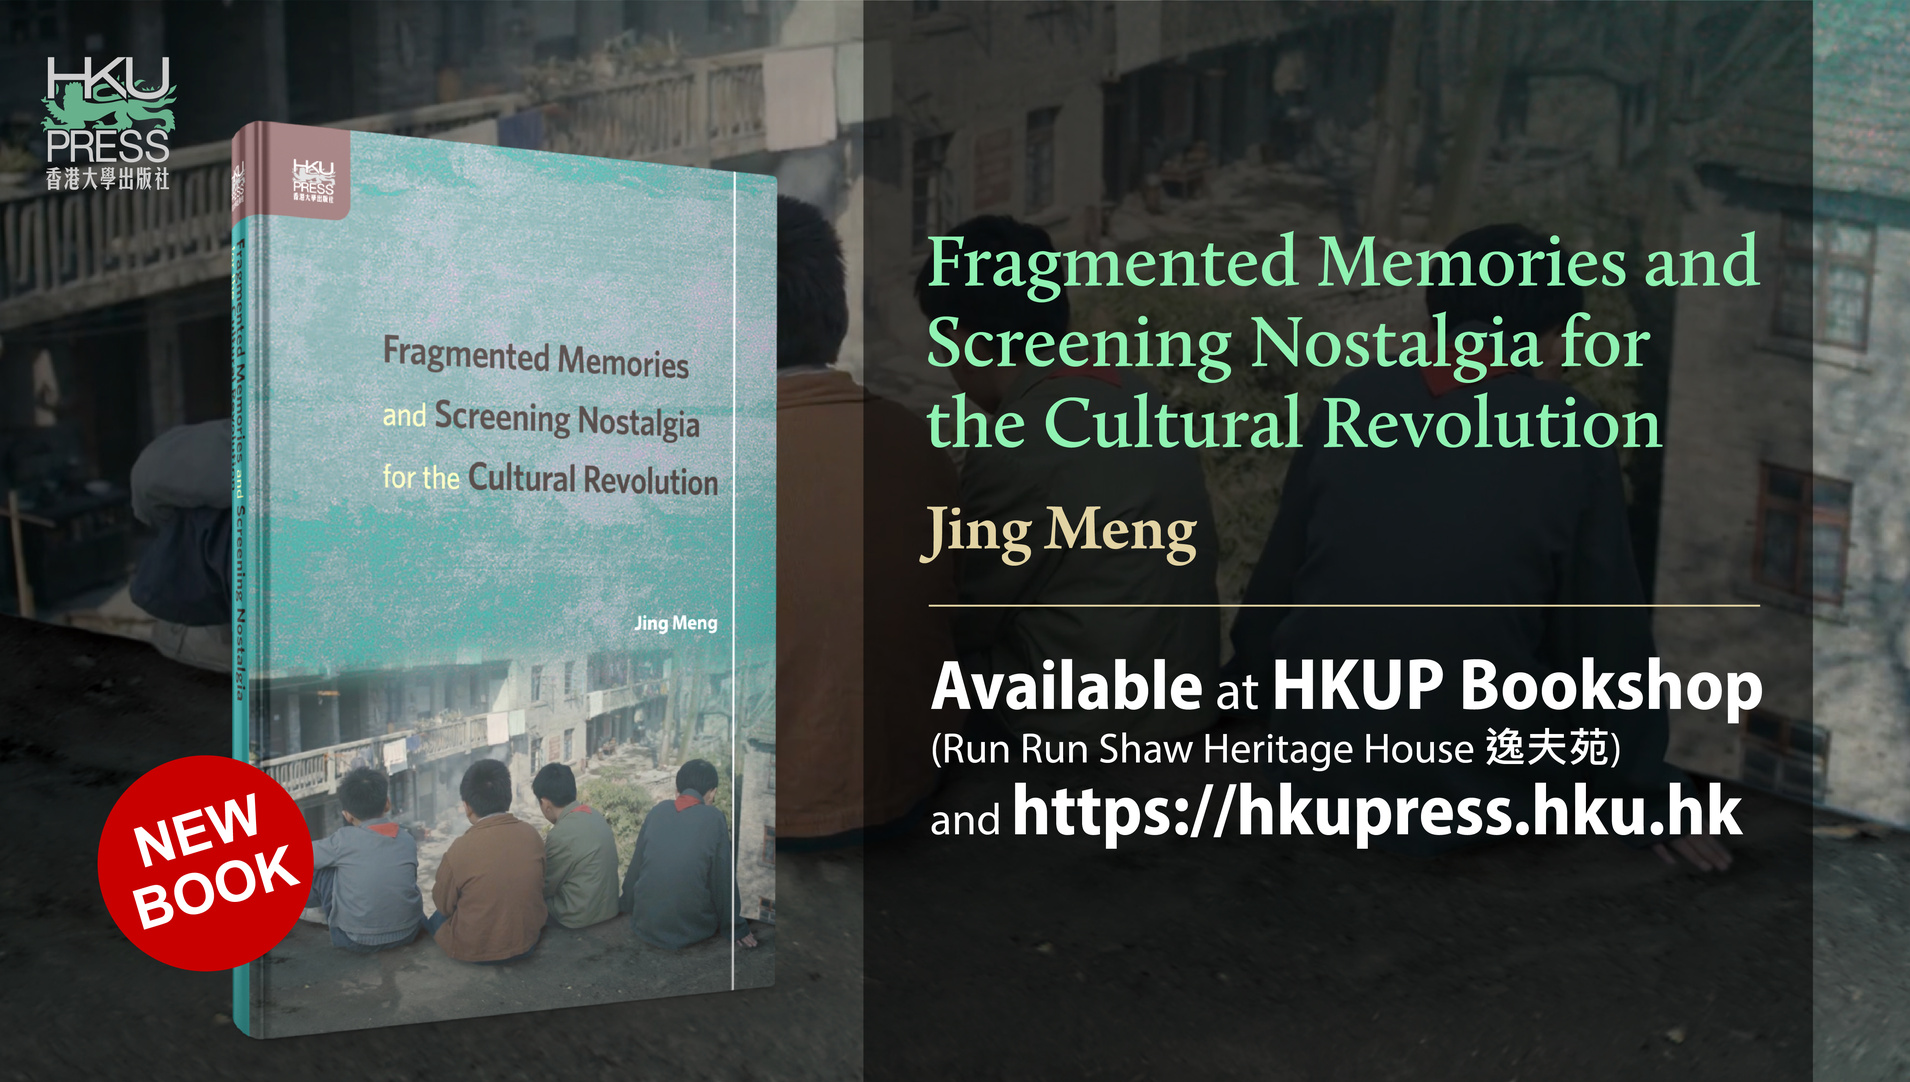 HKU Press - New Book Release